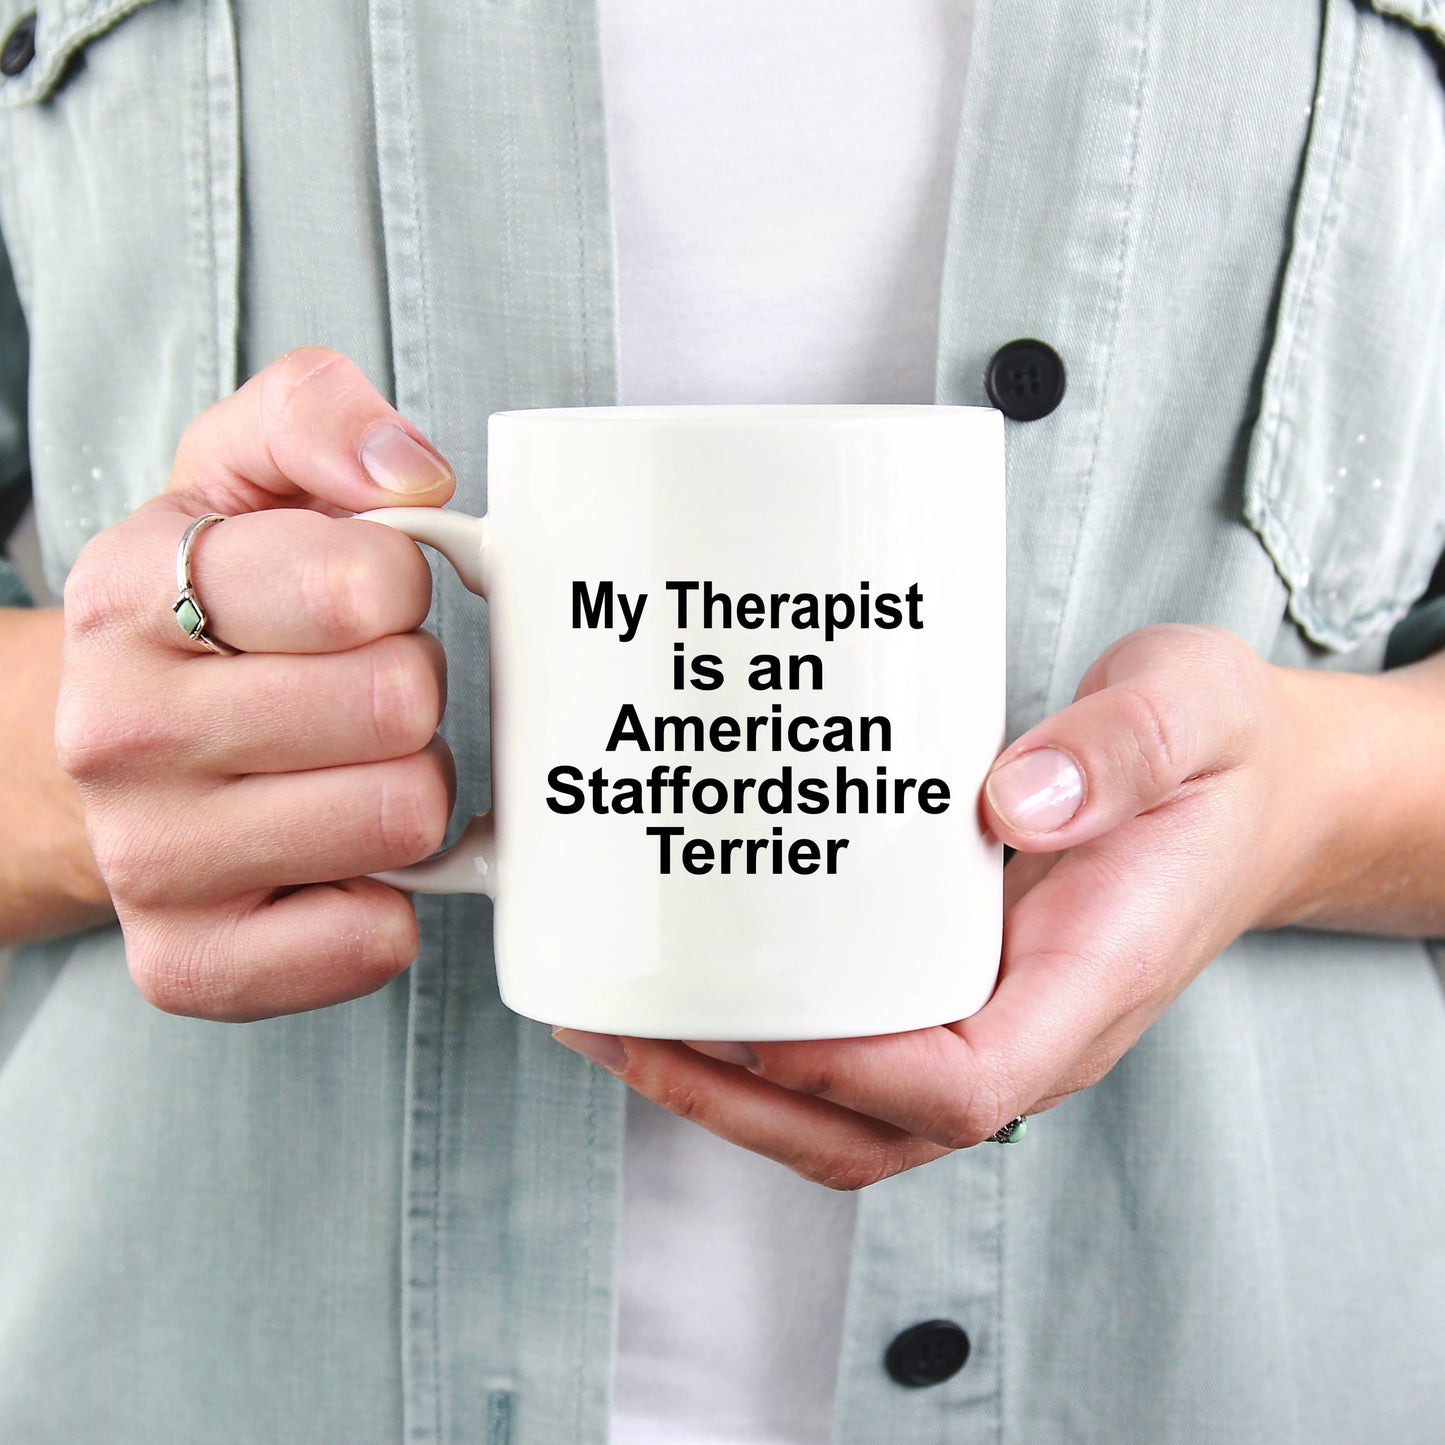 American Water Spaniel Dog Therapist Coffee Mug